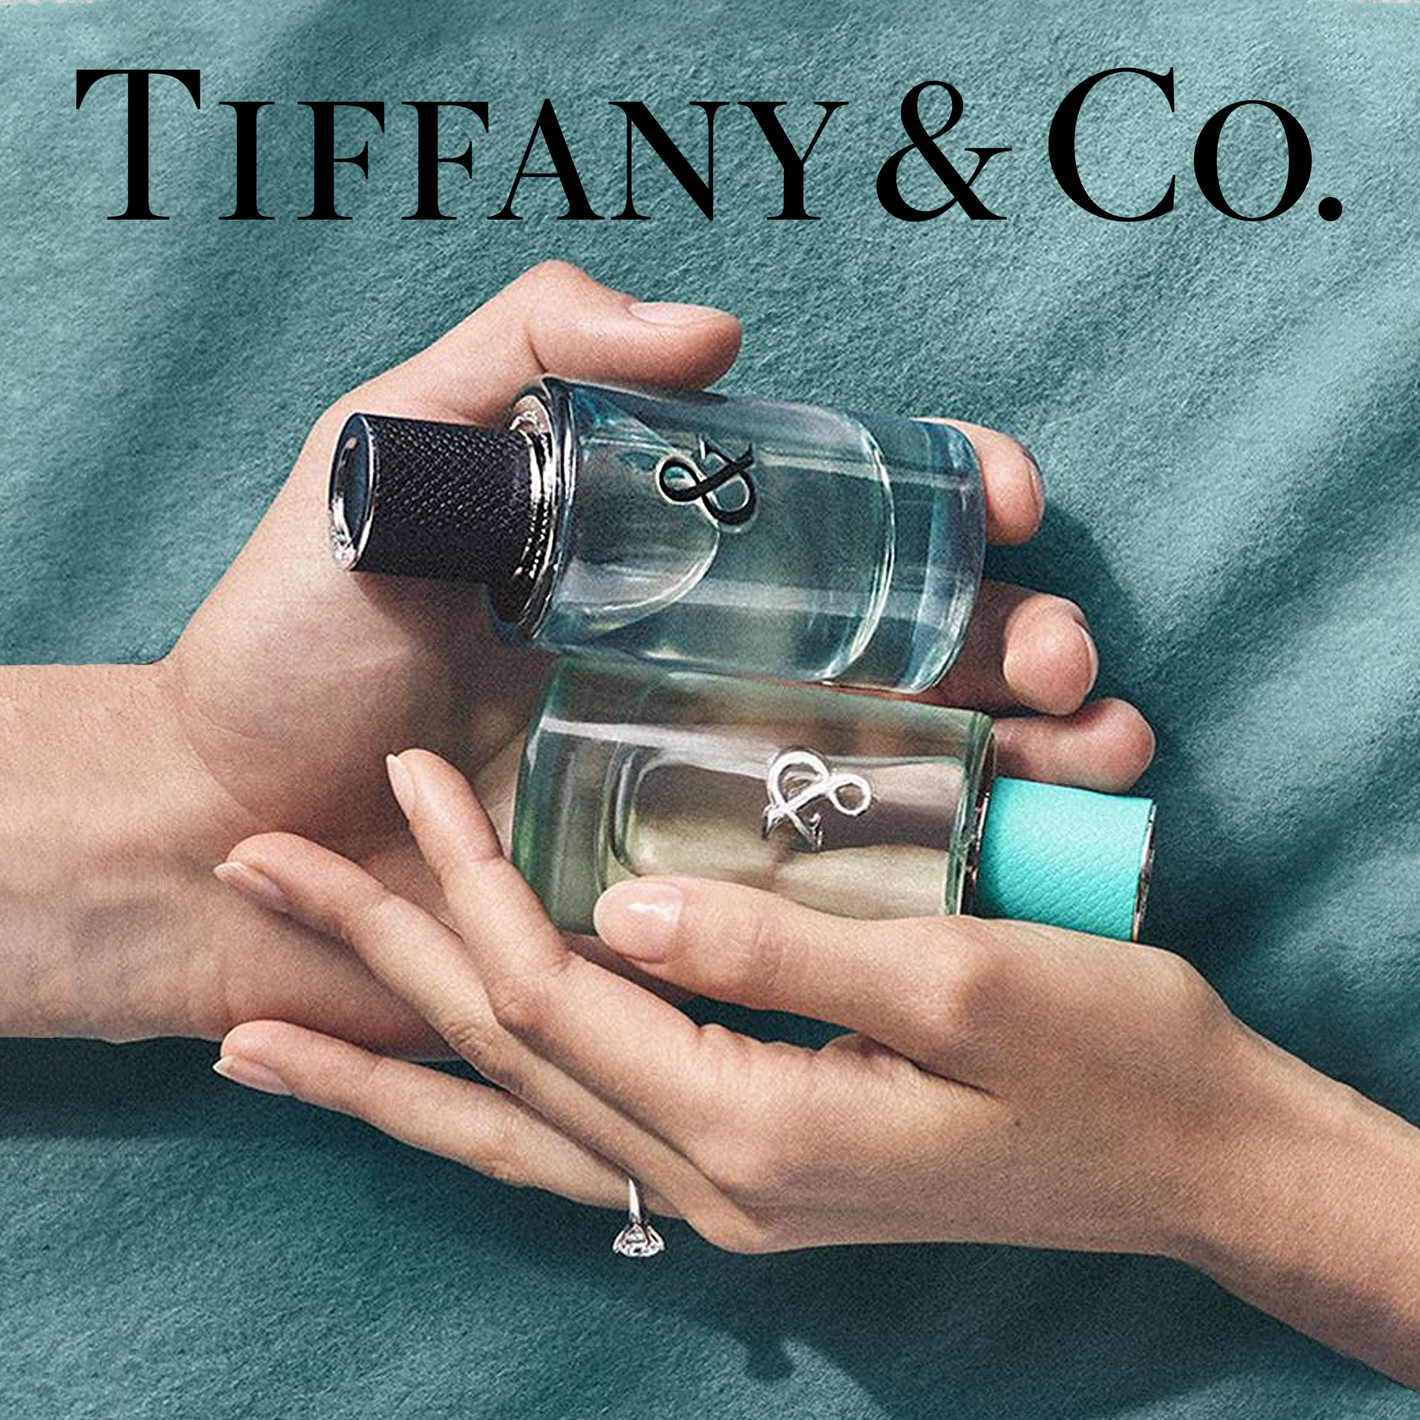 Tiffanny & Co.